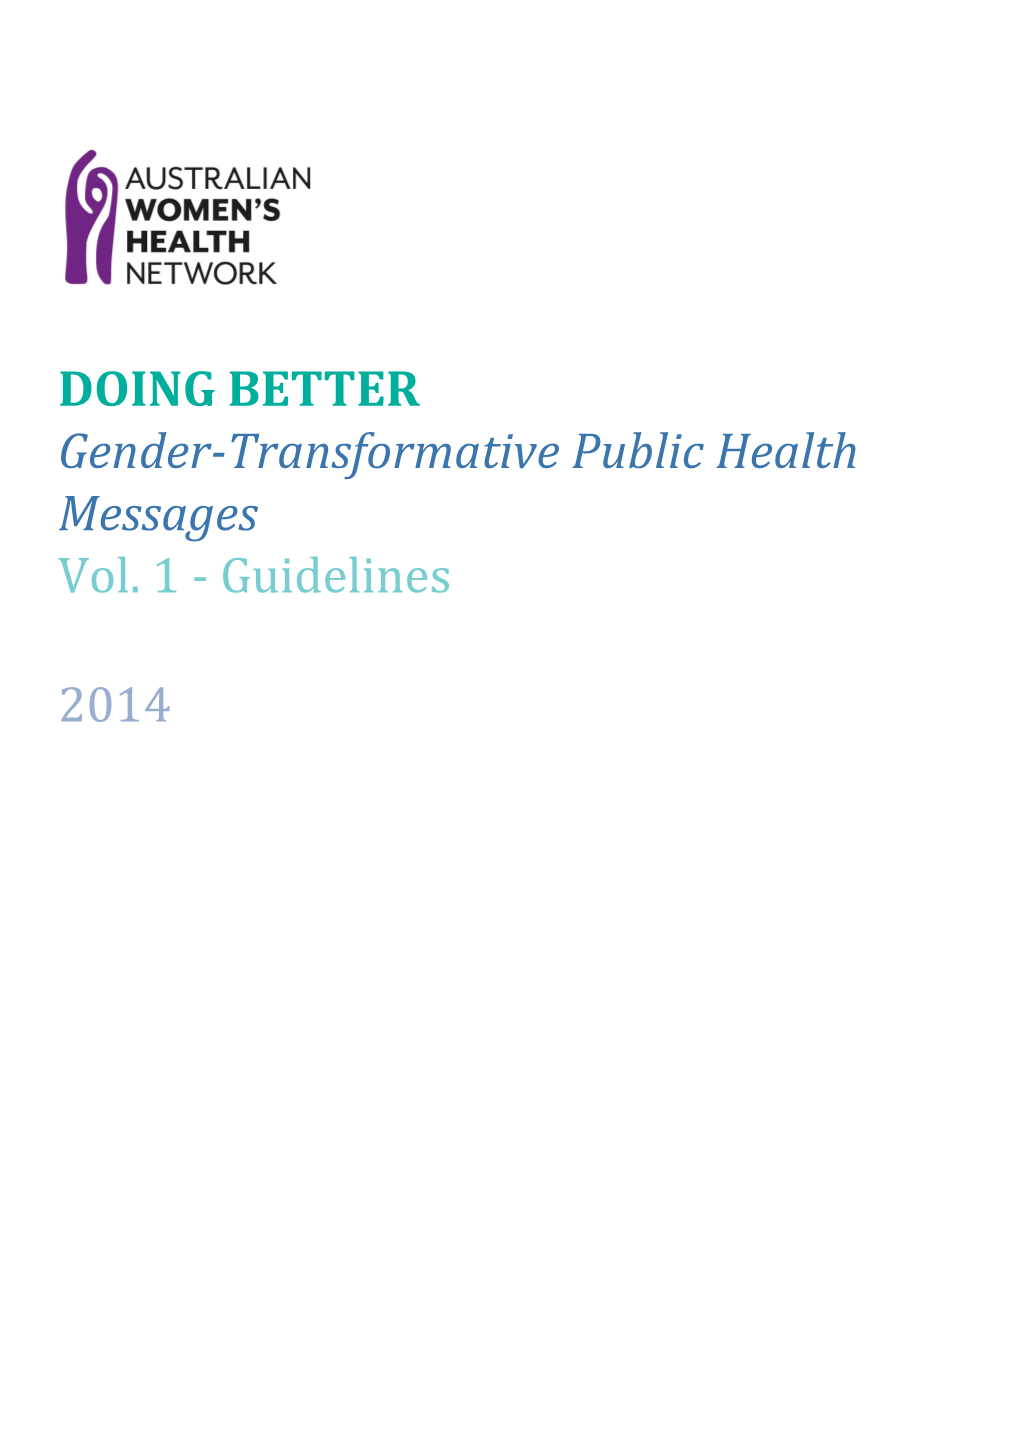 Gender-Transformative Public Health Messages